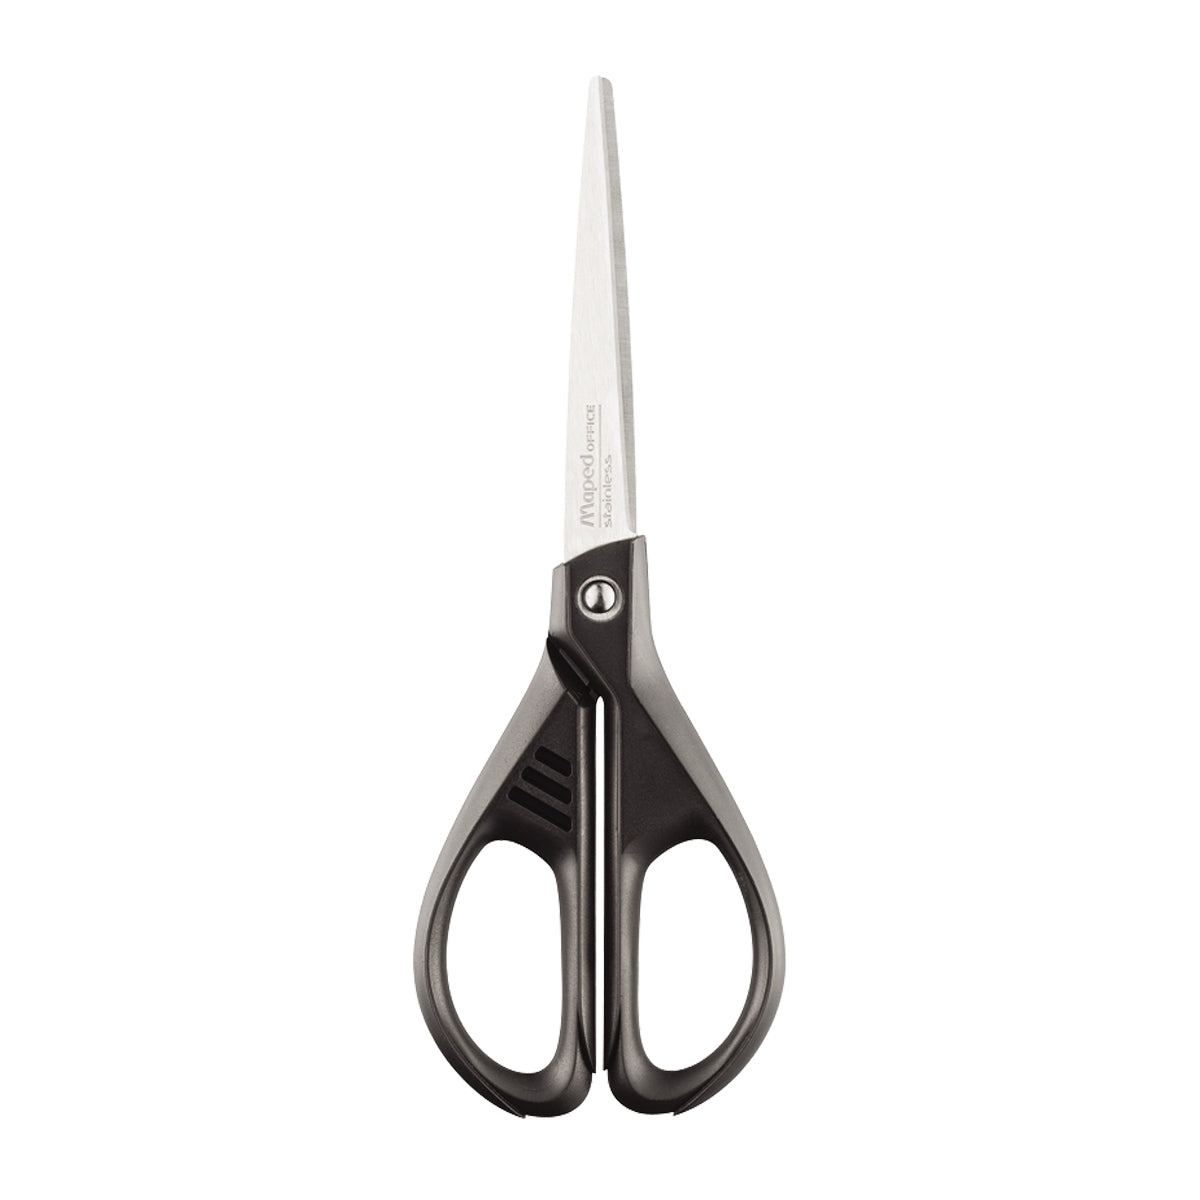 Maped Essential Scissors -17cm Stainless Steel Blade, Office Scissors UAE